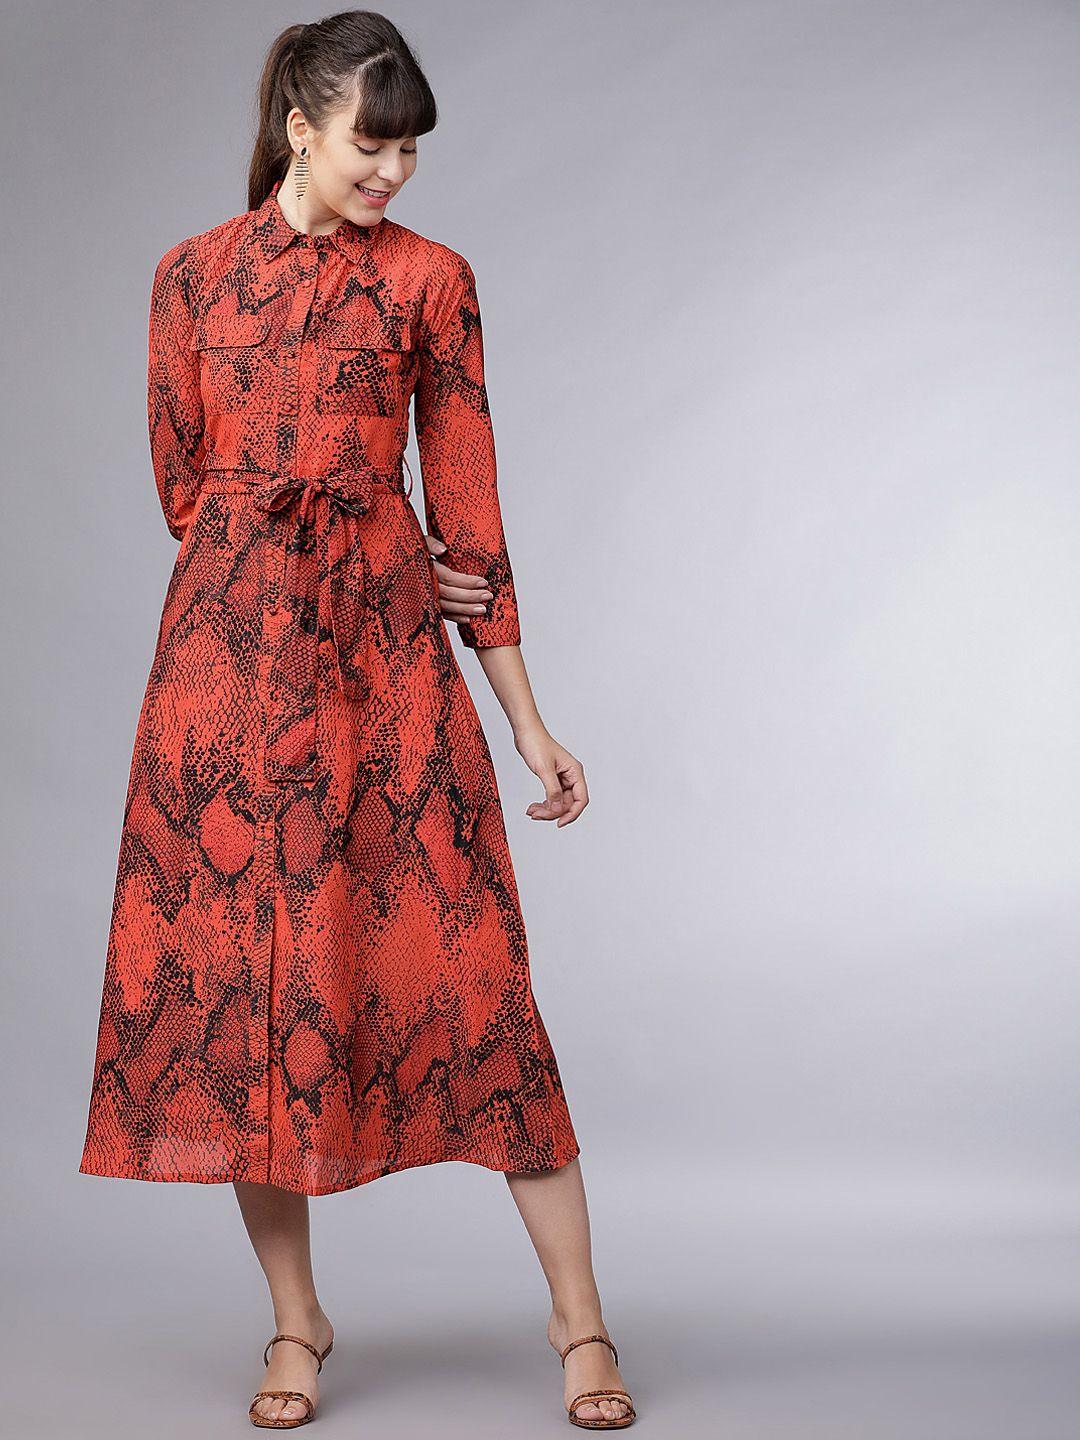 tokyo talkies women red & black snakeskin printed shirt dress